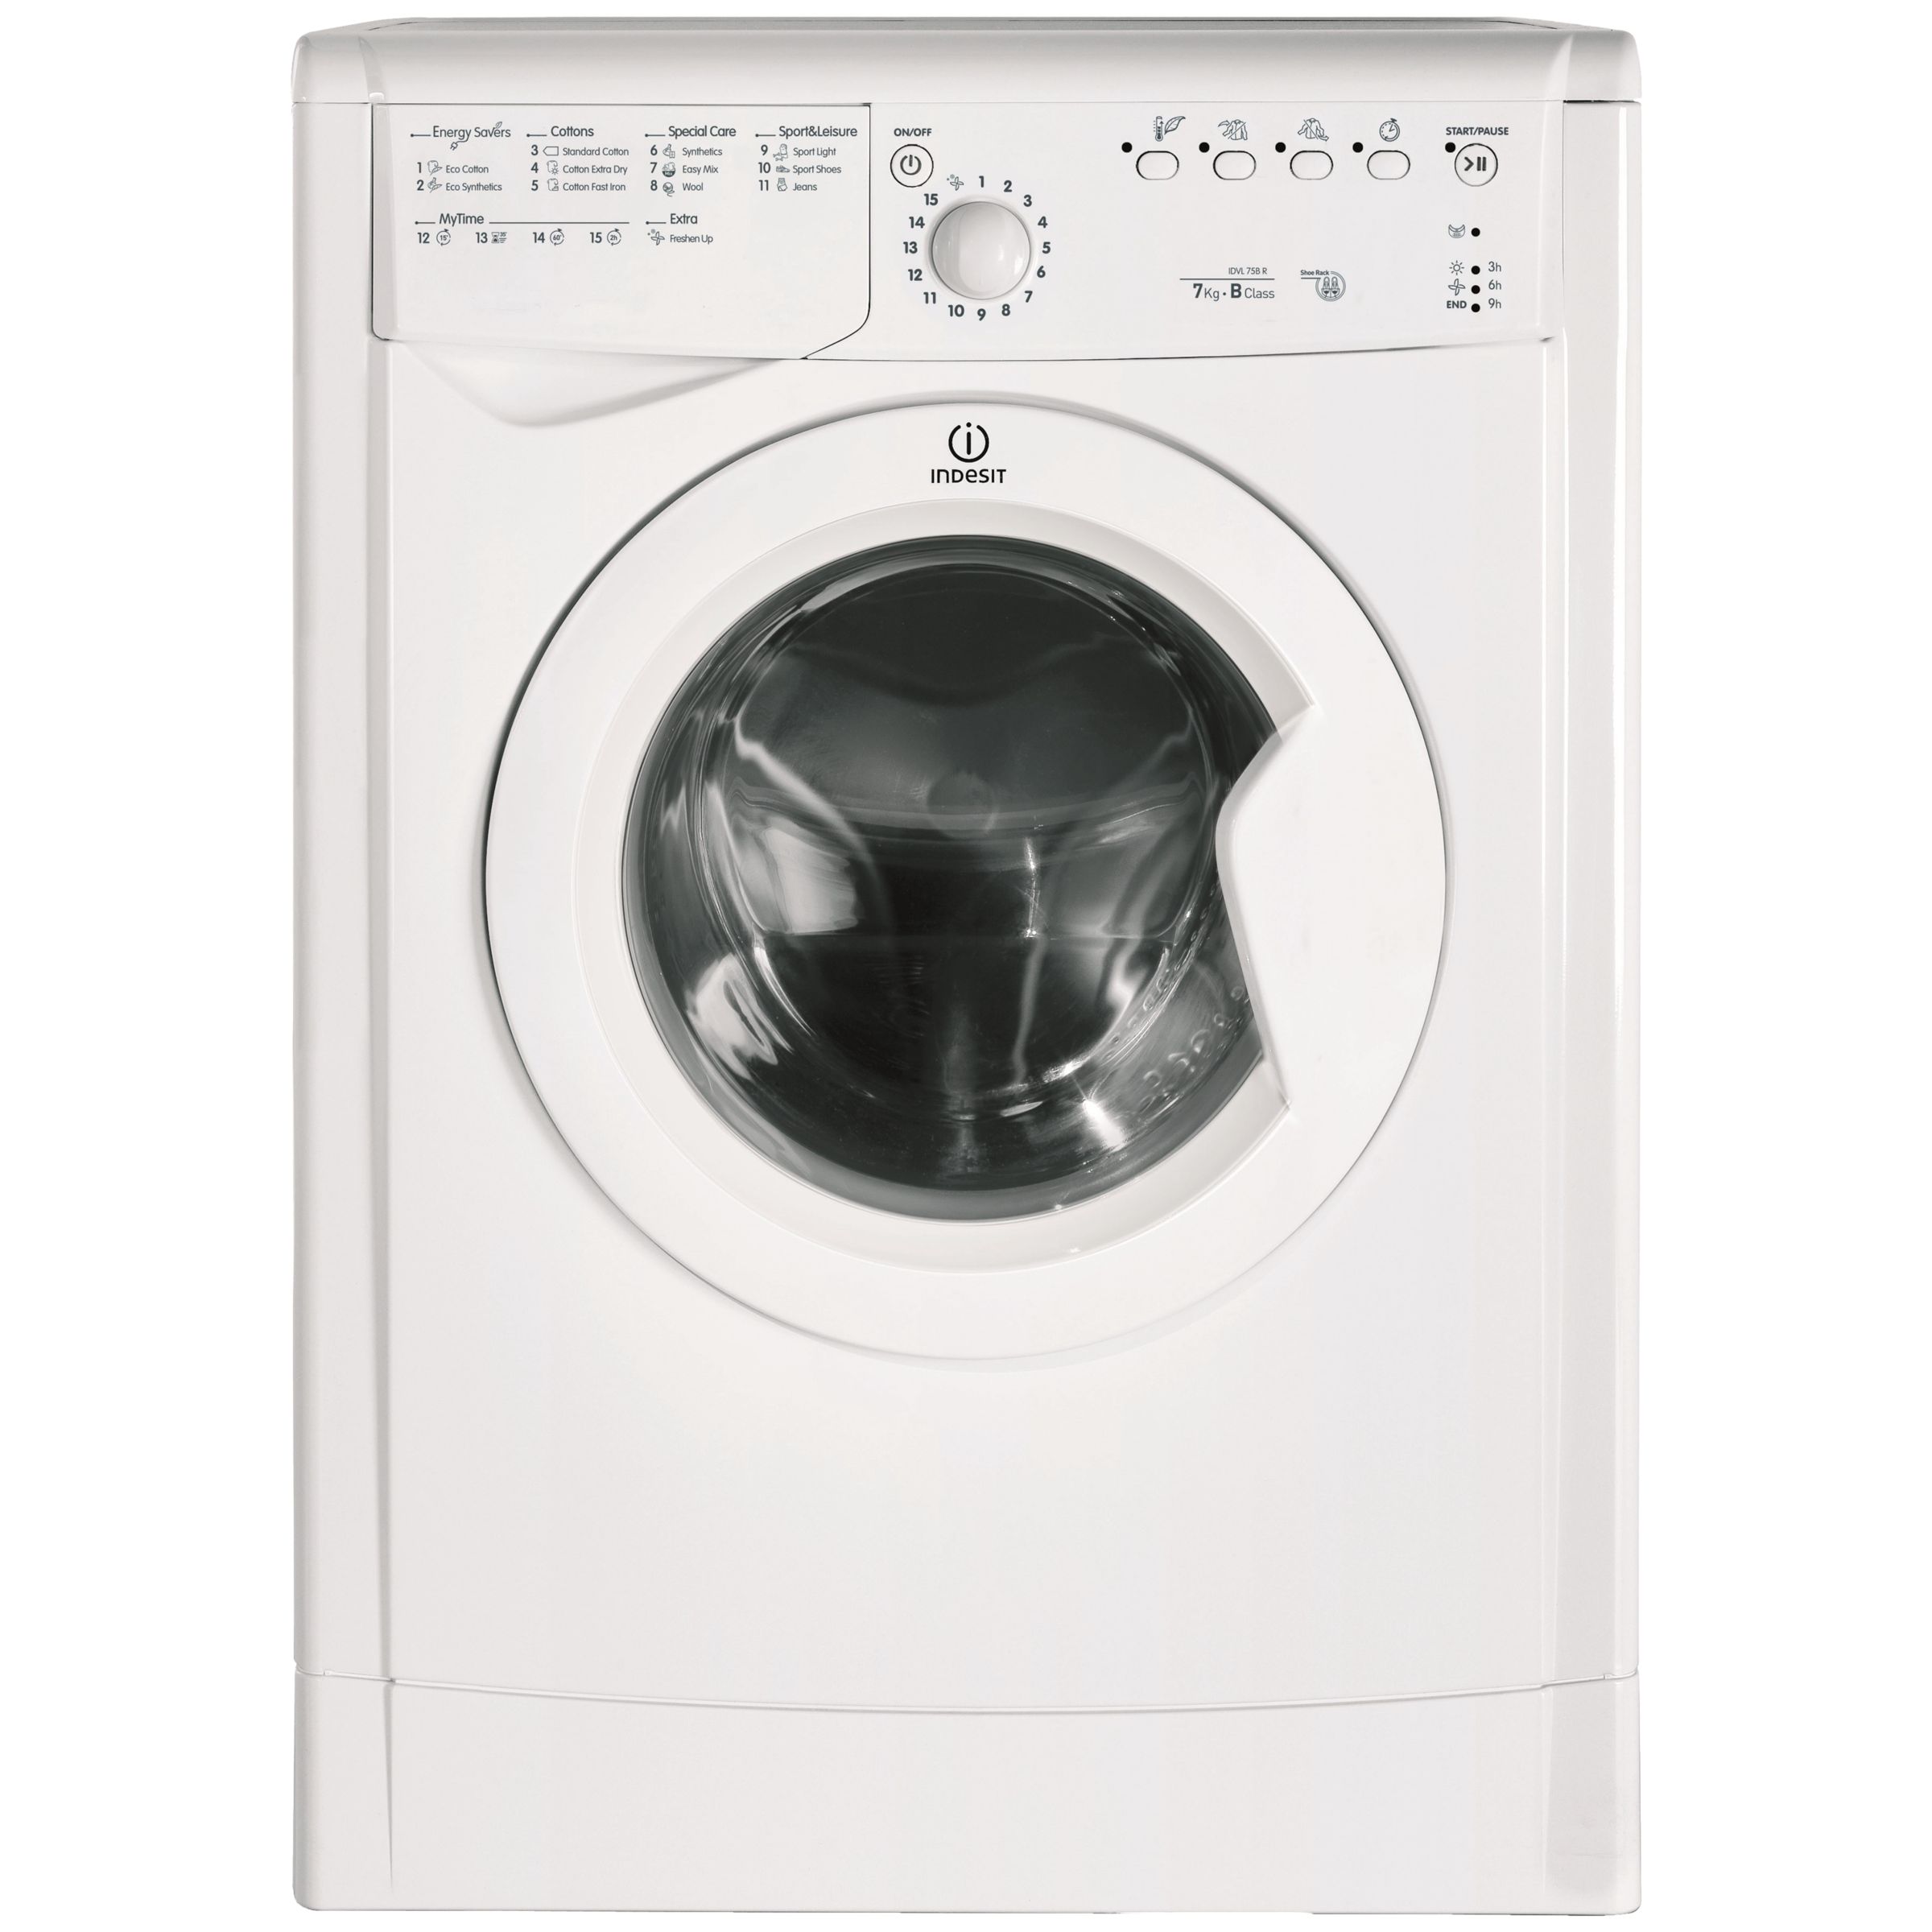 Indesit IDVL75 B R.9 Vented Tumble Dryer, 7kg Load, B Energy Rating, White